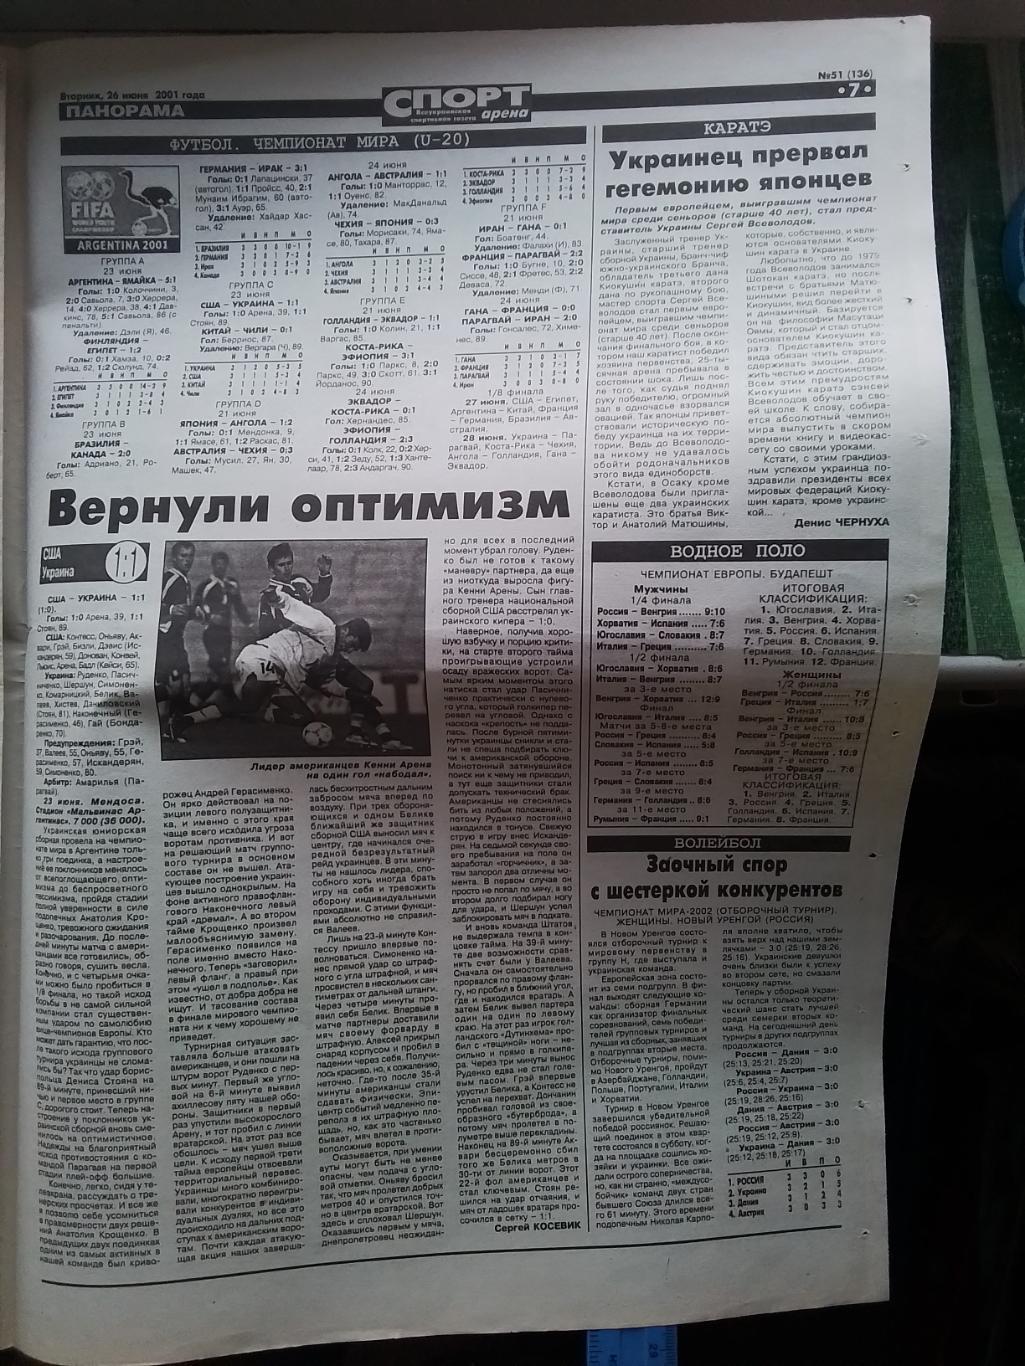 Газета Спортарена Киев 26 06 200151 (136) Динамо - чемпион ЧМ U-20 США Украина 6